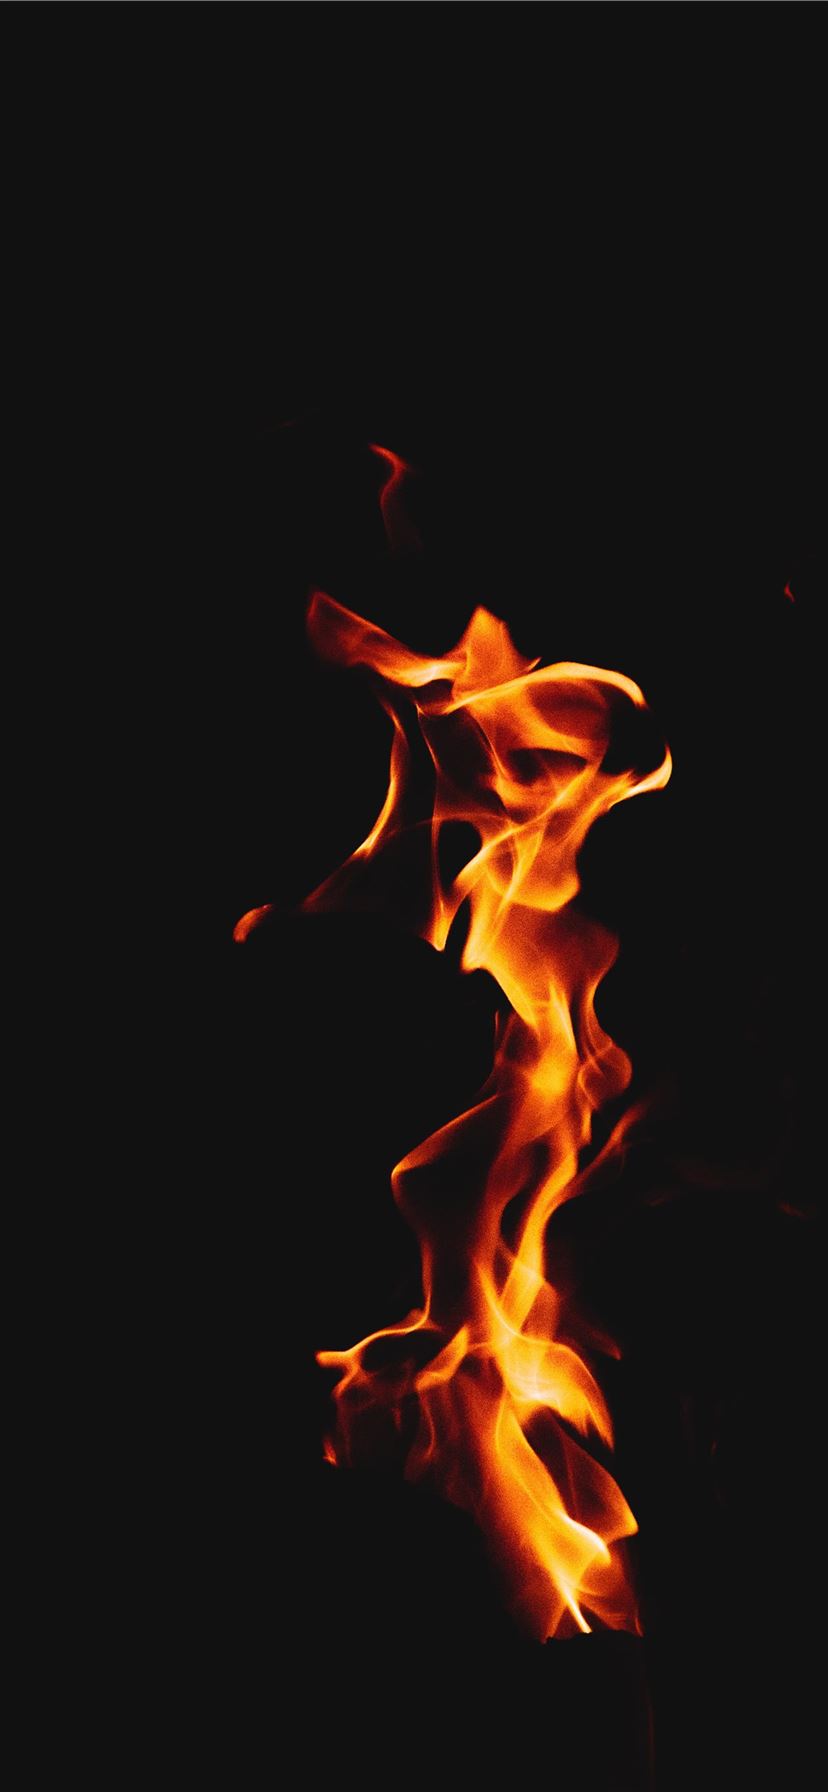 orange fire on black background iPhone Wallpaper Free Download